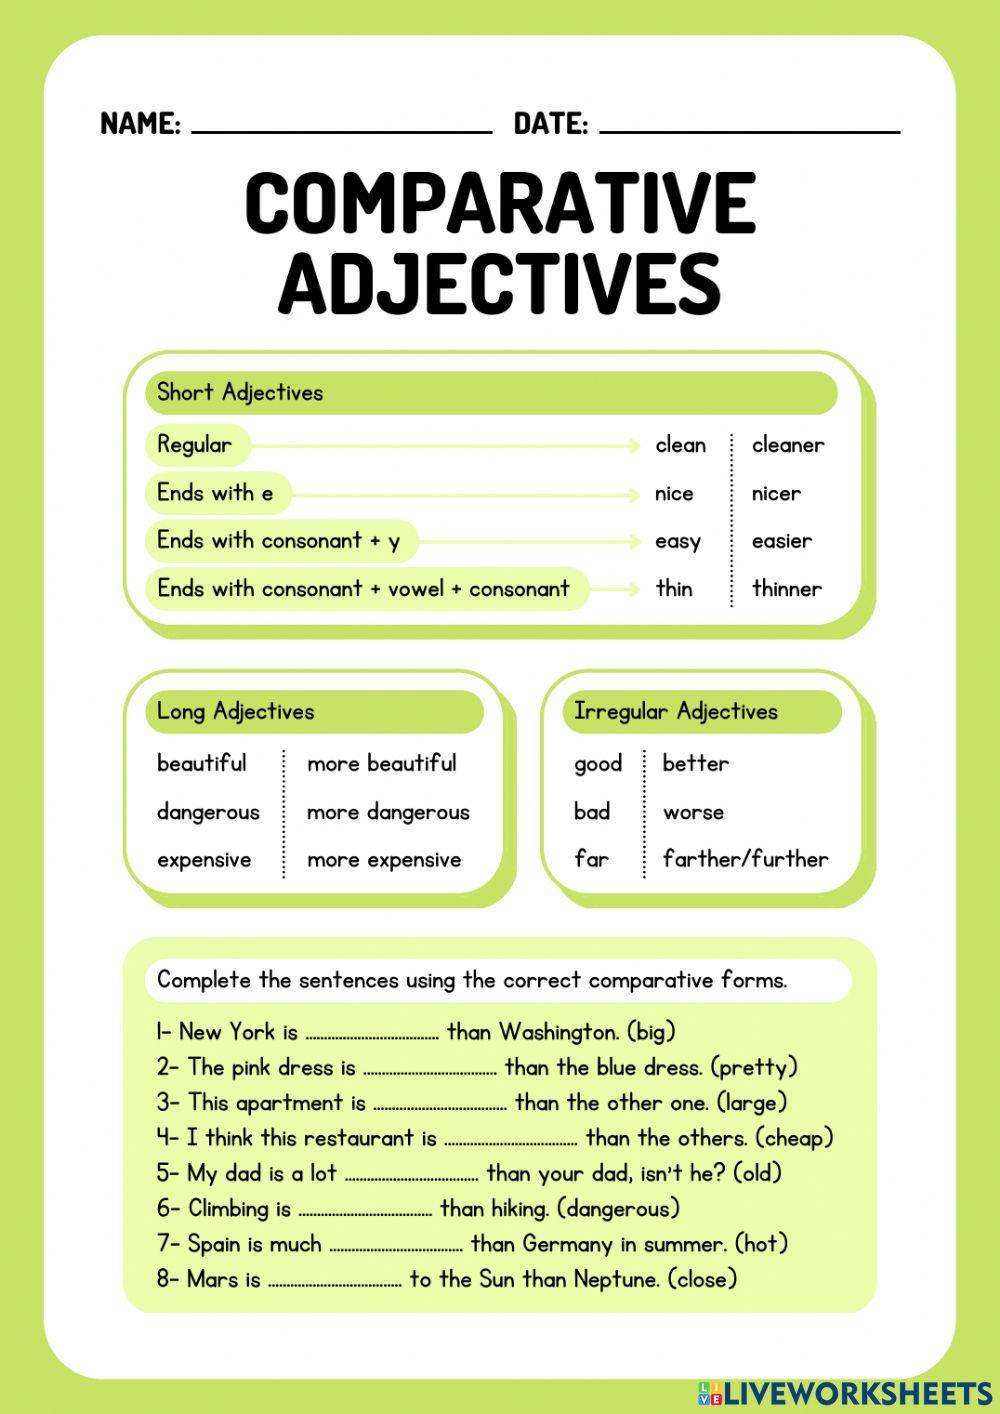 Grammar Worksheets ответы ad. Grammar Worksheets adjectives describing places ответы. Degrees of Comparison of adverbs Rules. Get comparative